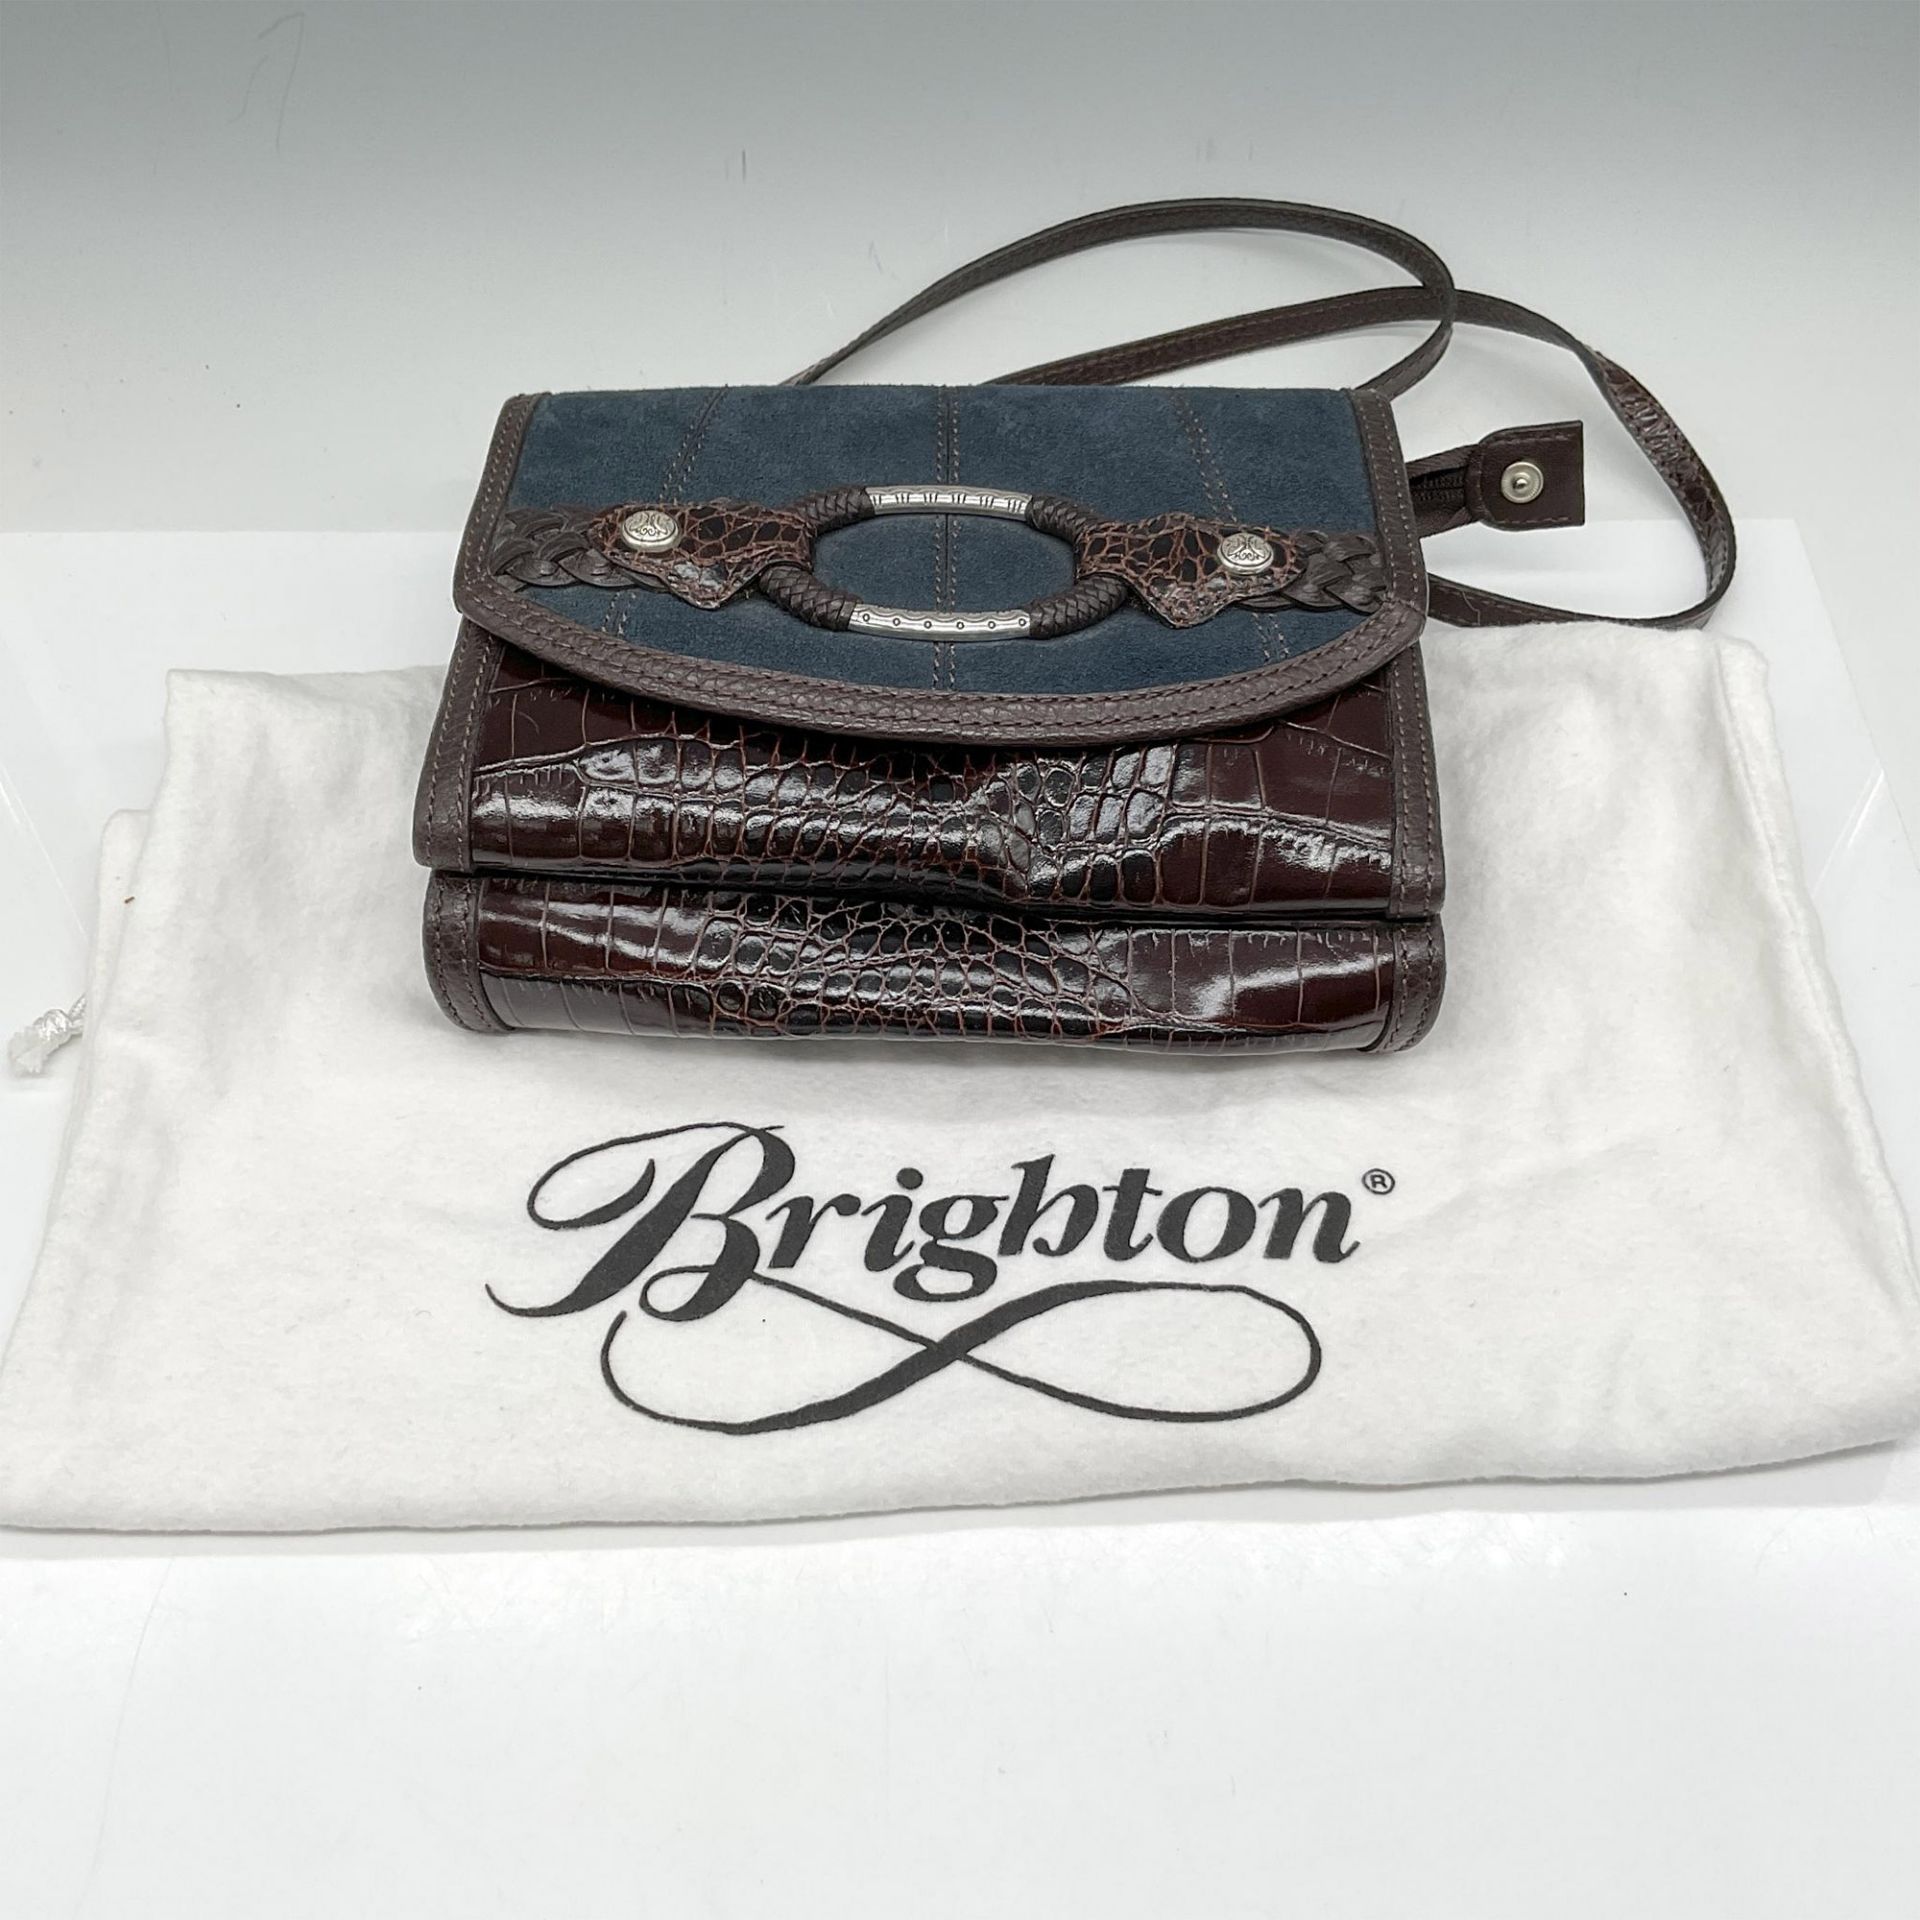 Brighton Denim and Leather Crossbody Bag - Image 4 of 4